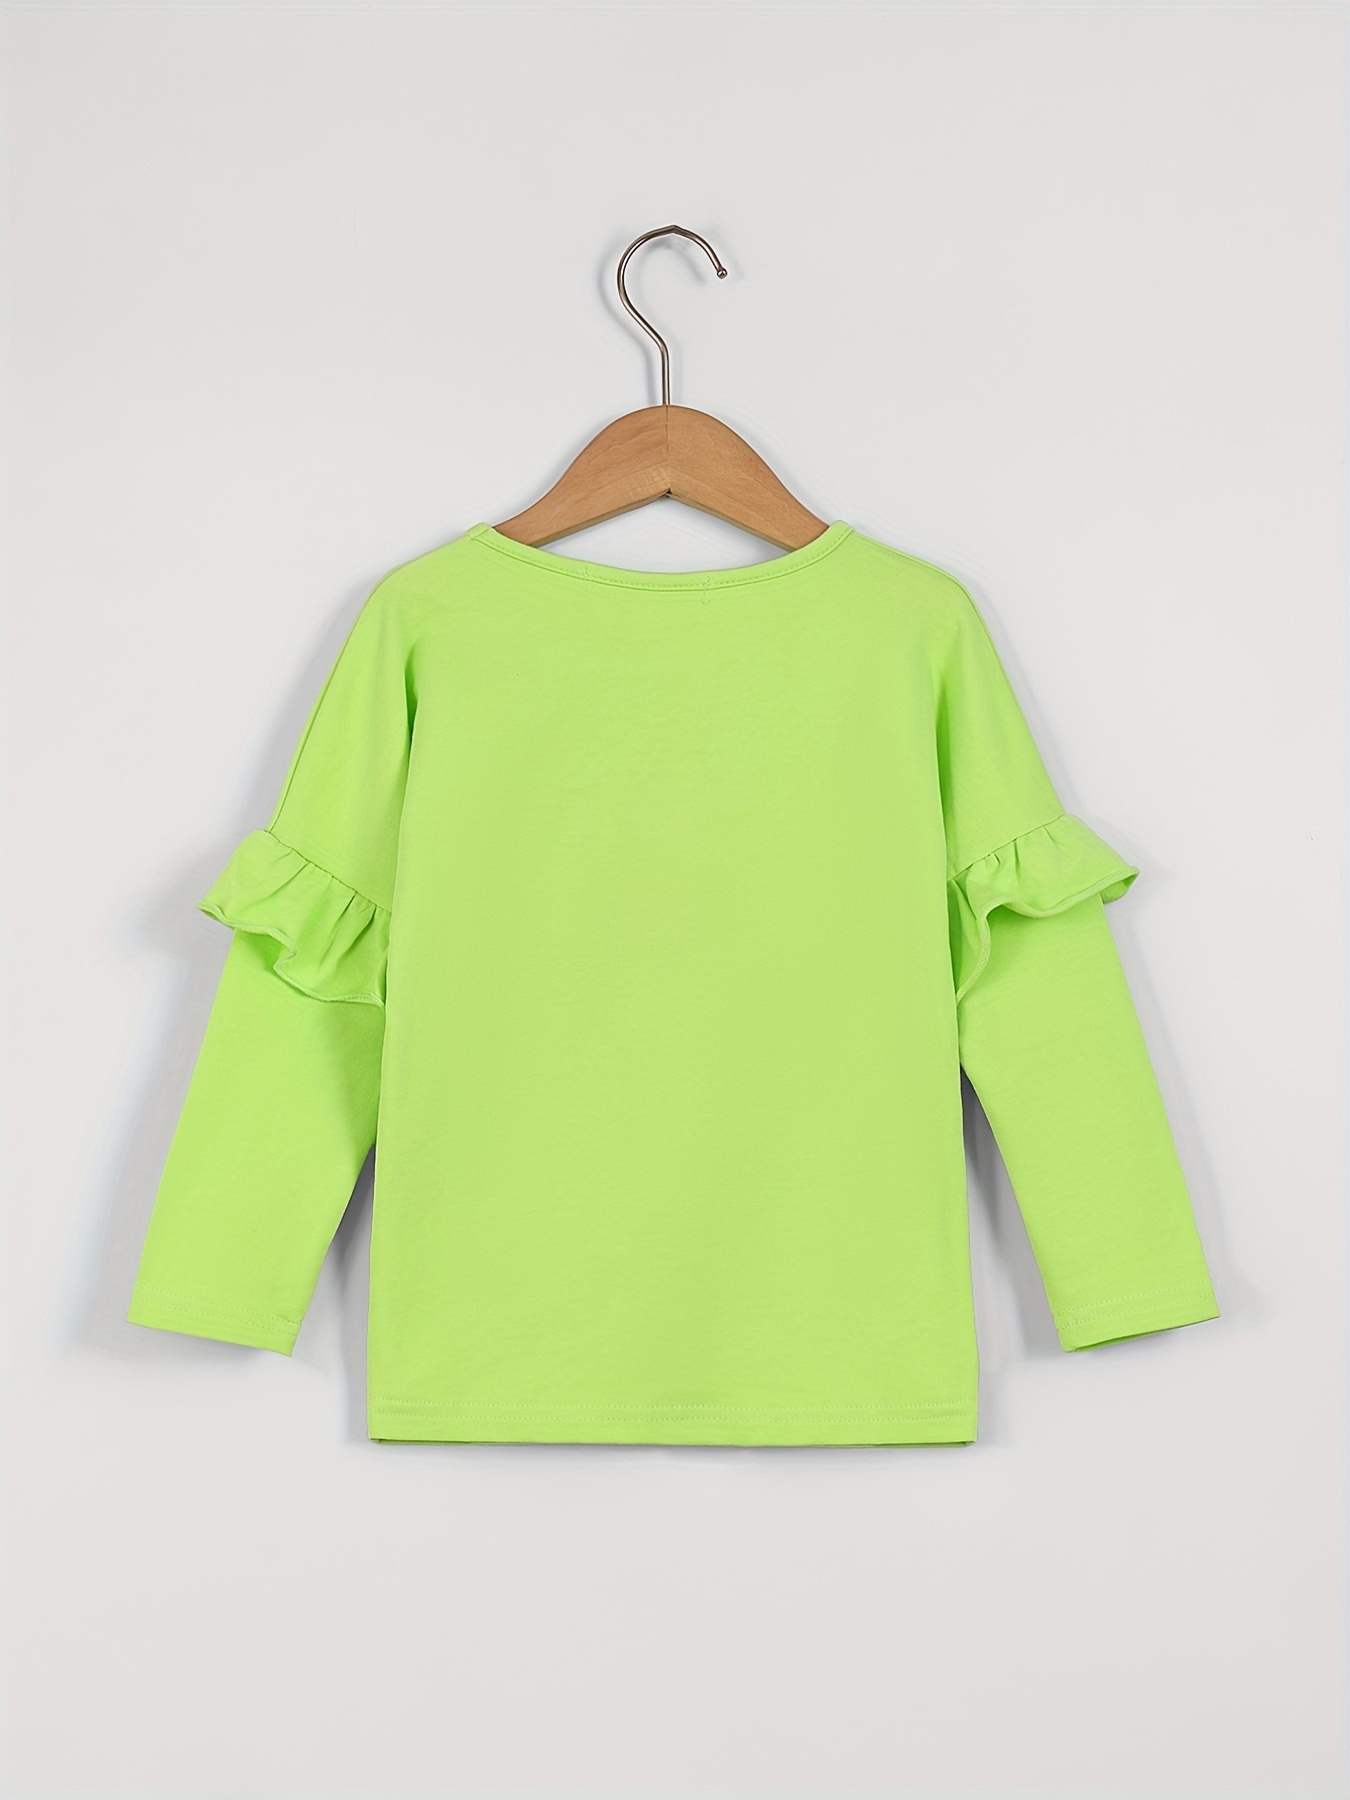 Camiseta estampada con volantes en verde de niña